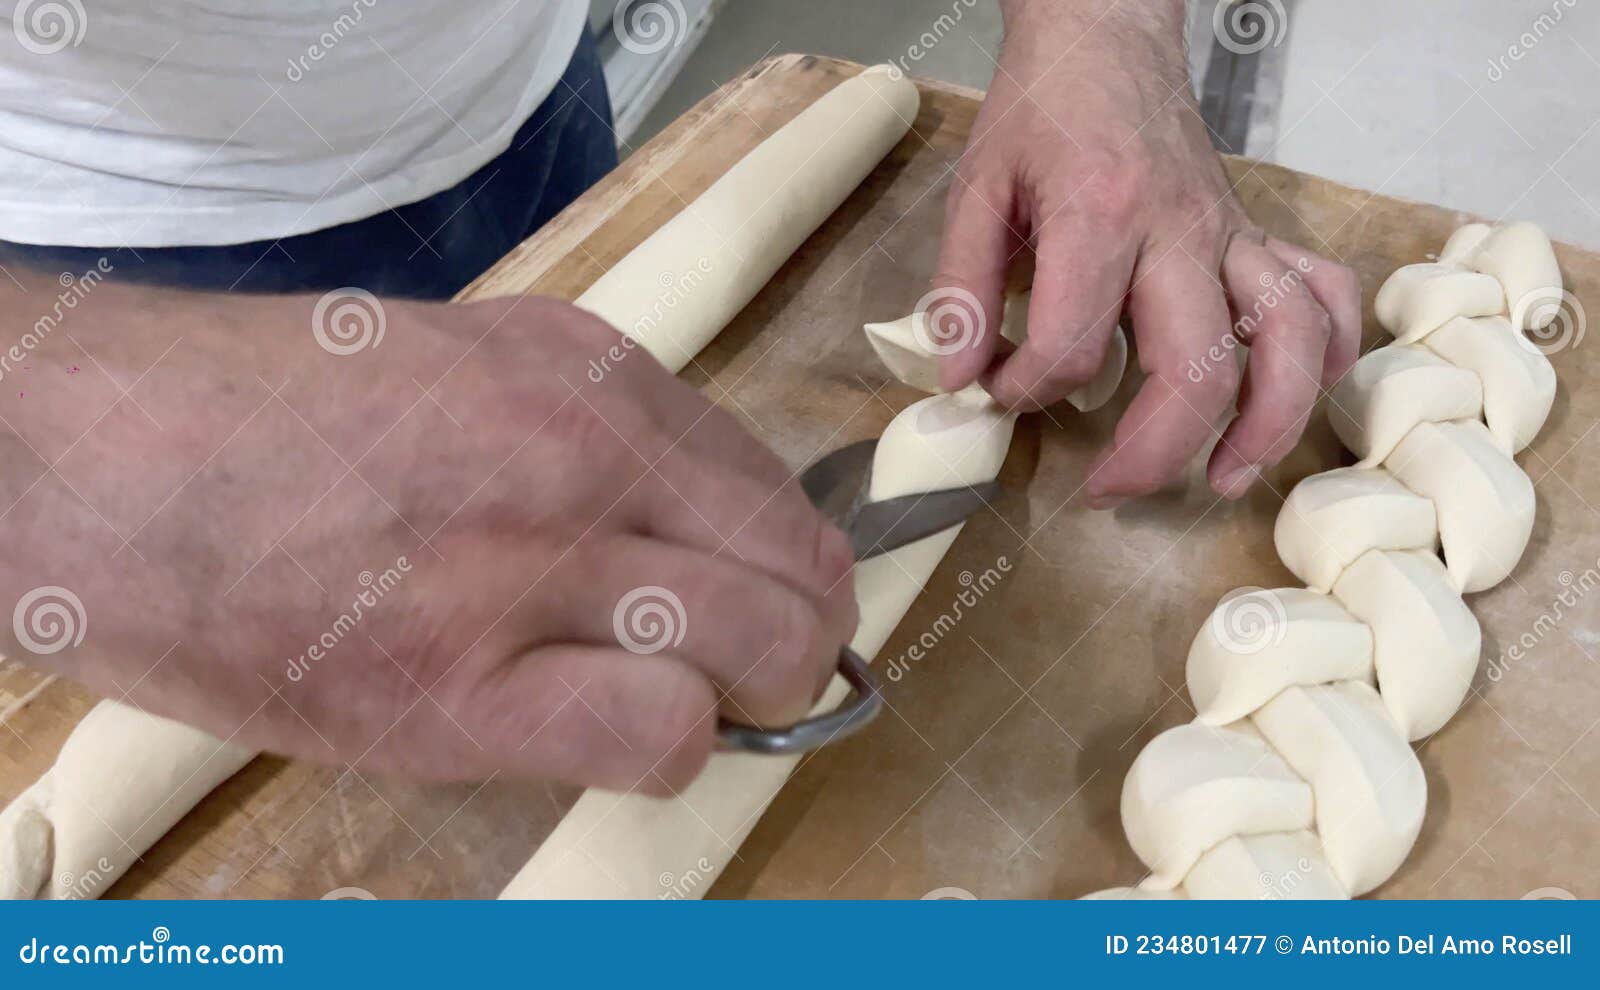 baker's hands ing bread.